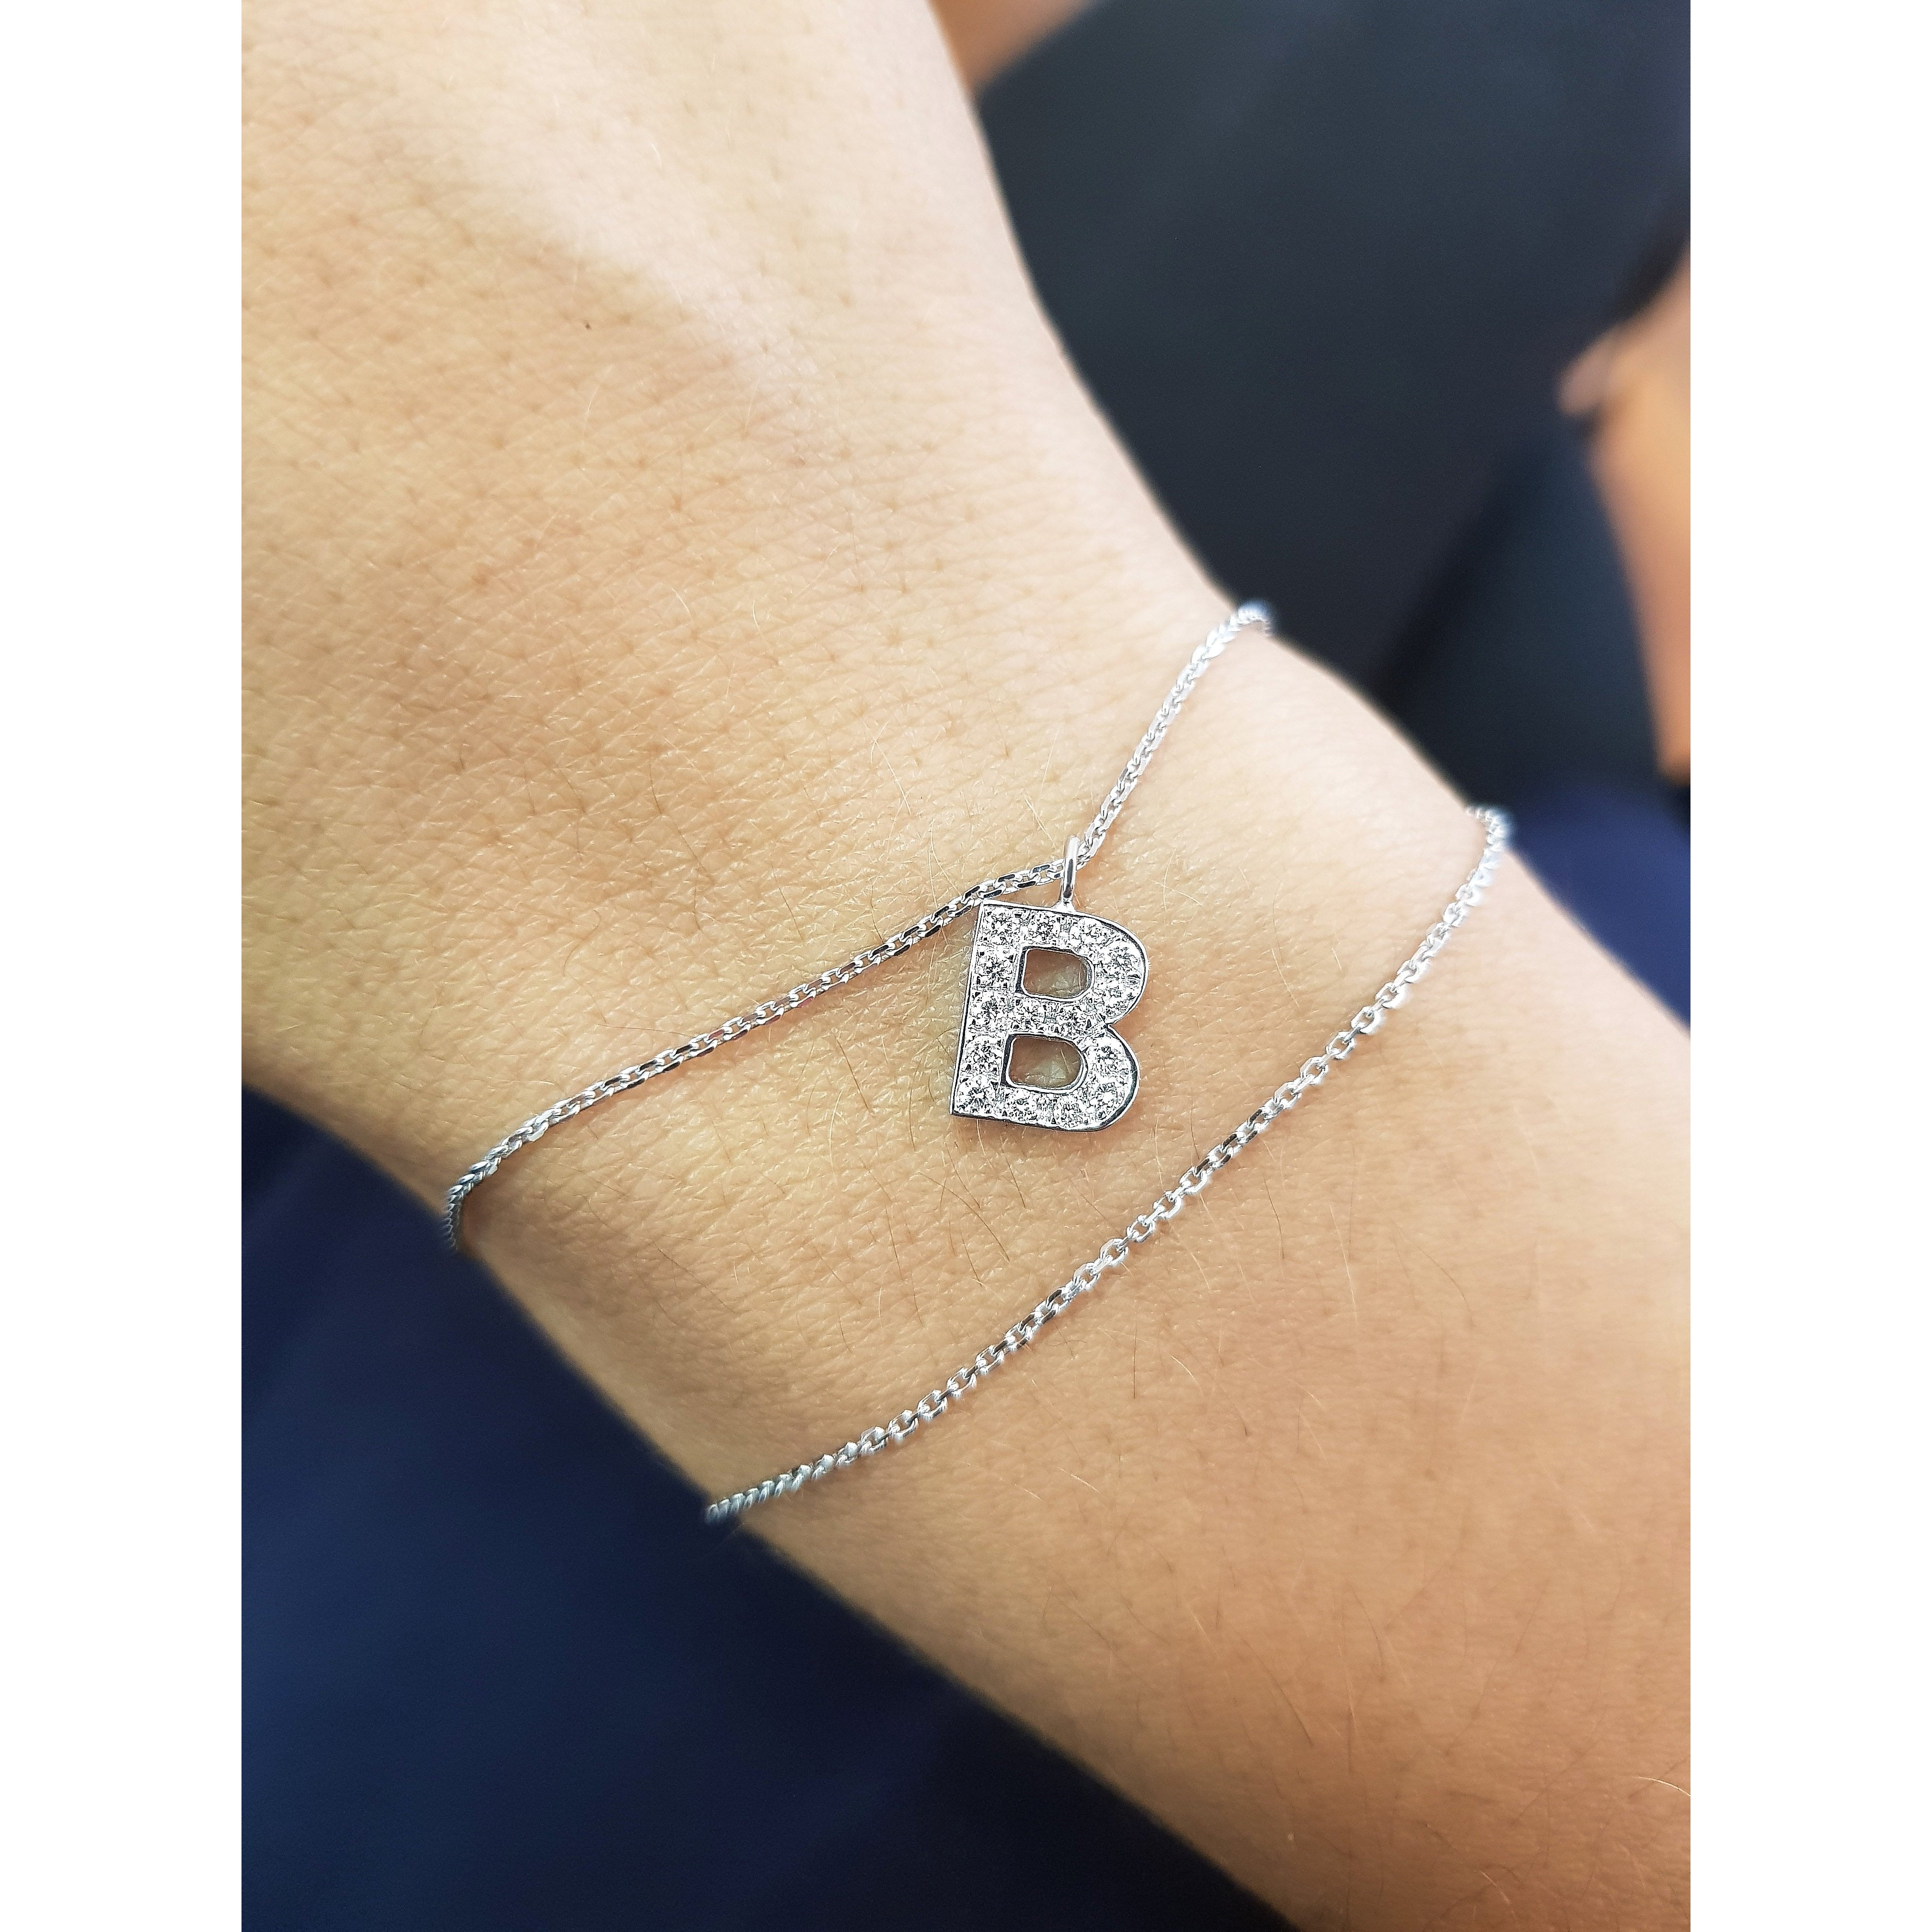 Barbara Letter Lab Grown Diamonds Bracelet   (0.15 Carat) -14K White Gold